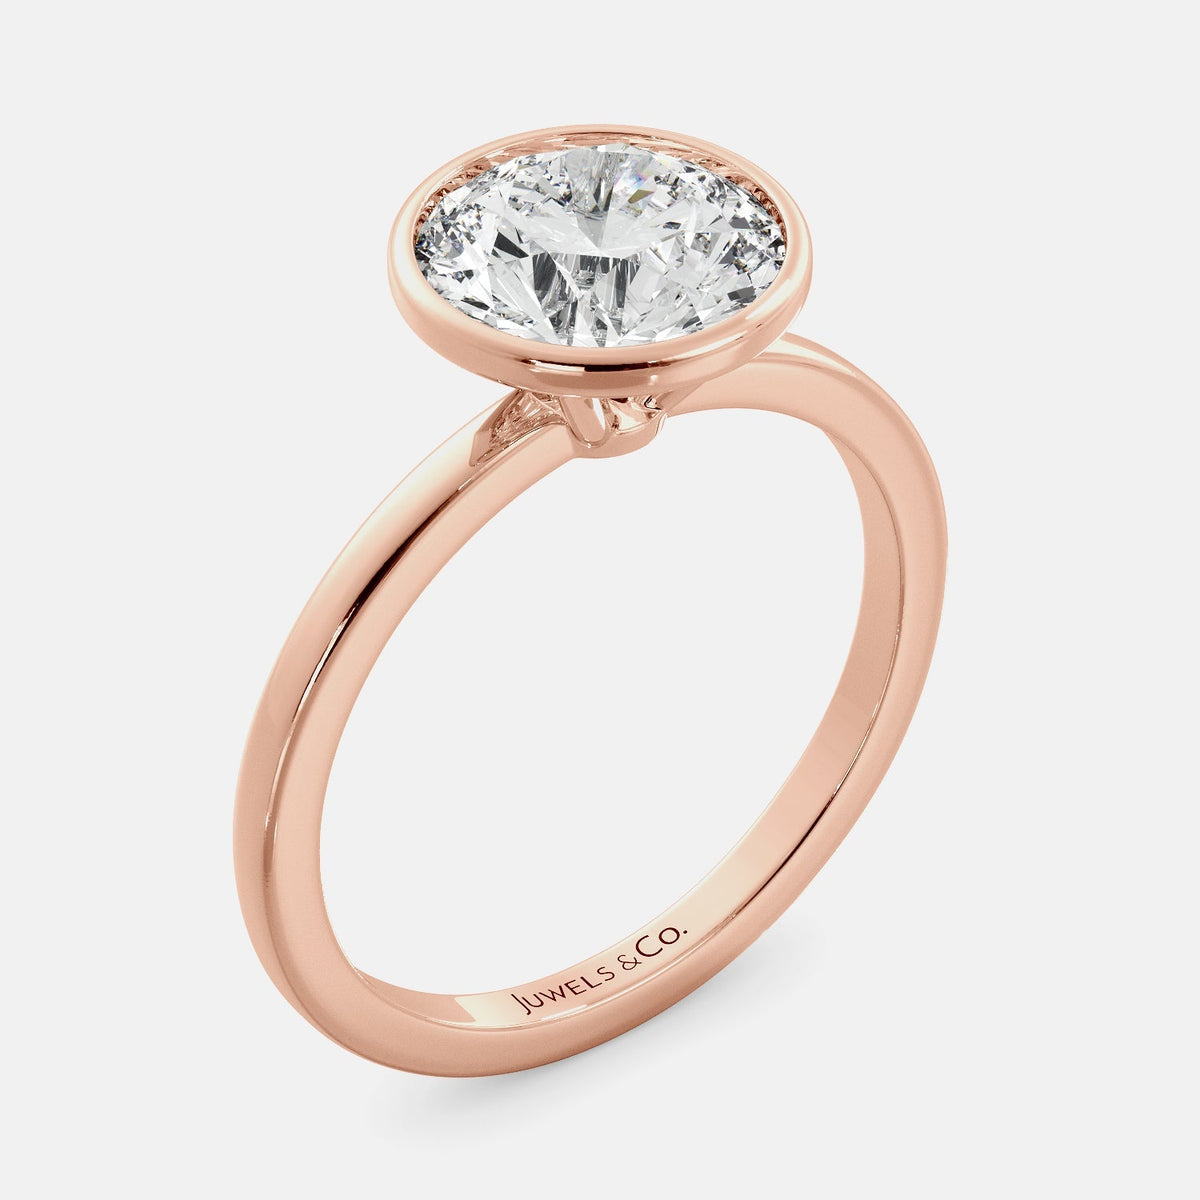 Lab-grown Round Cut Diamond Bezel Ring, 2-carat, rose gold 14K